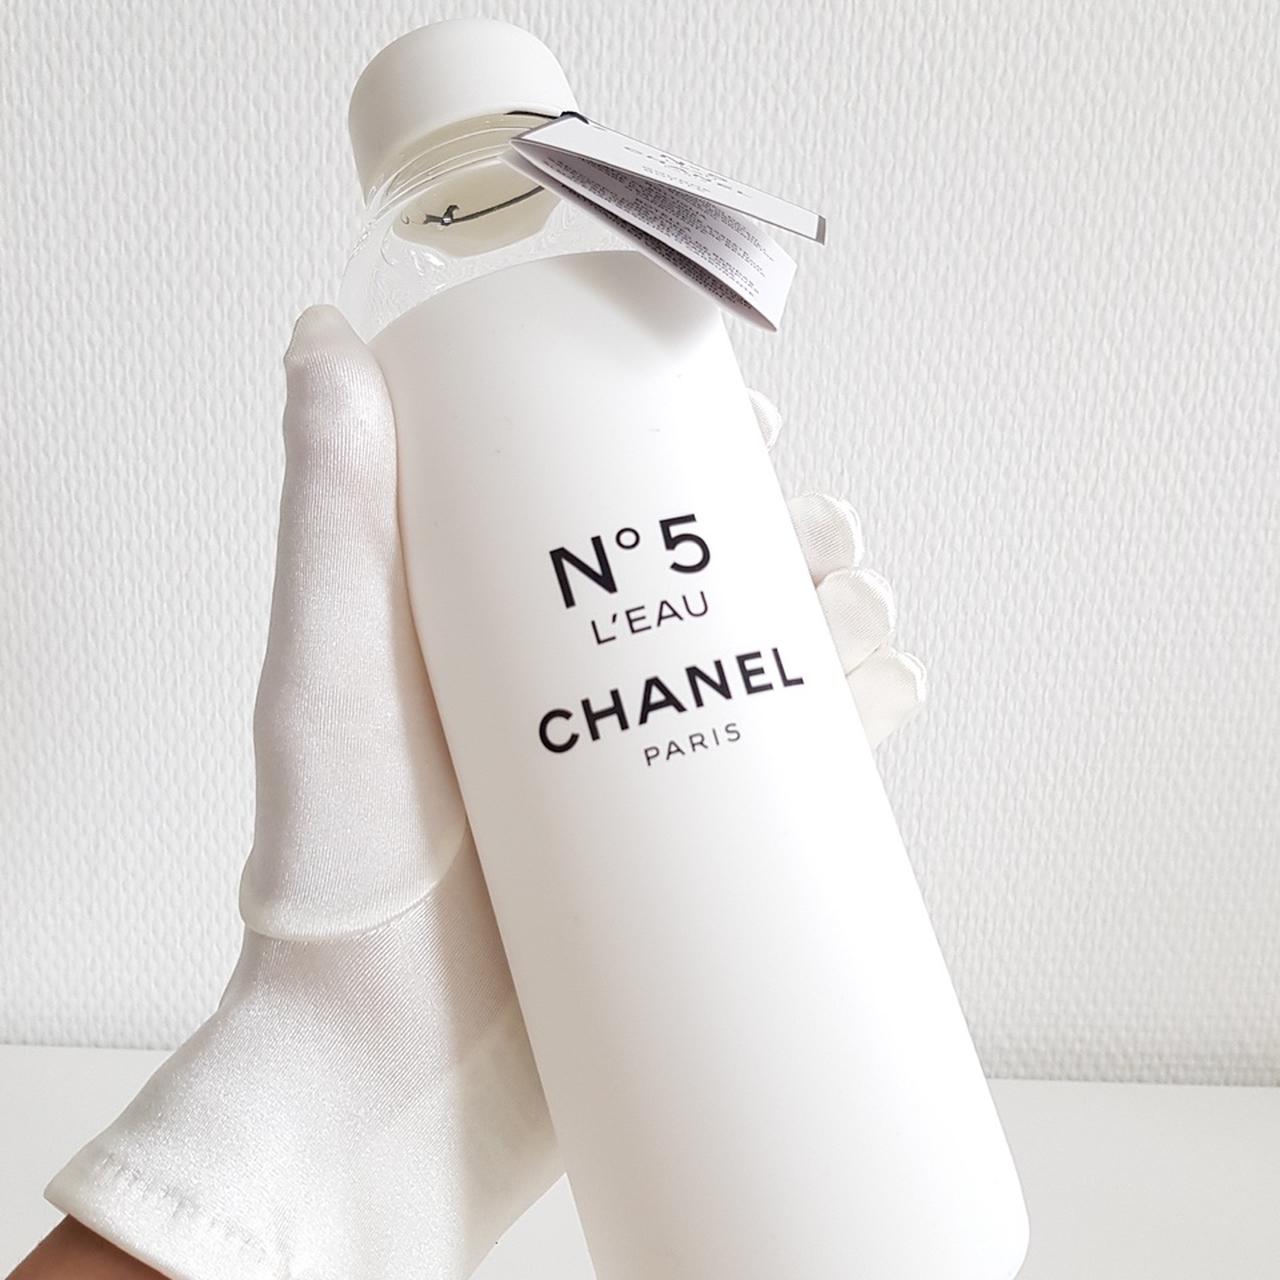 Chanel no 5 edt 2 oz full splash bottle